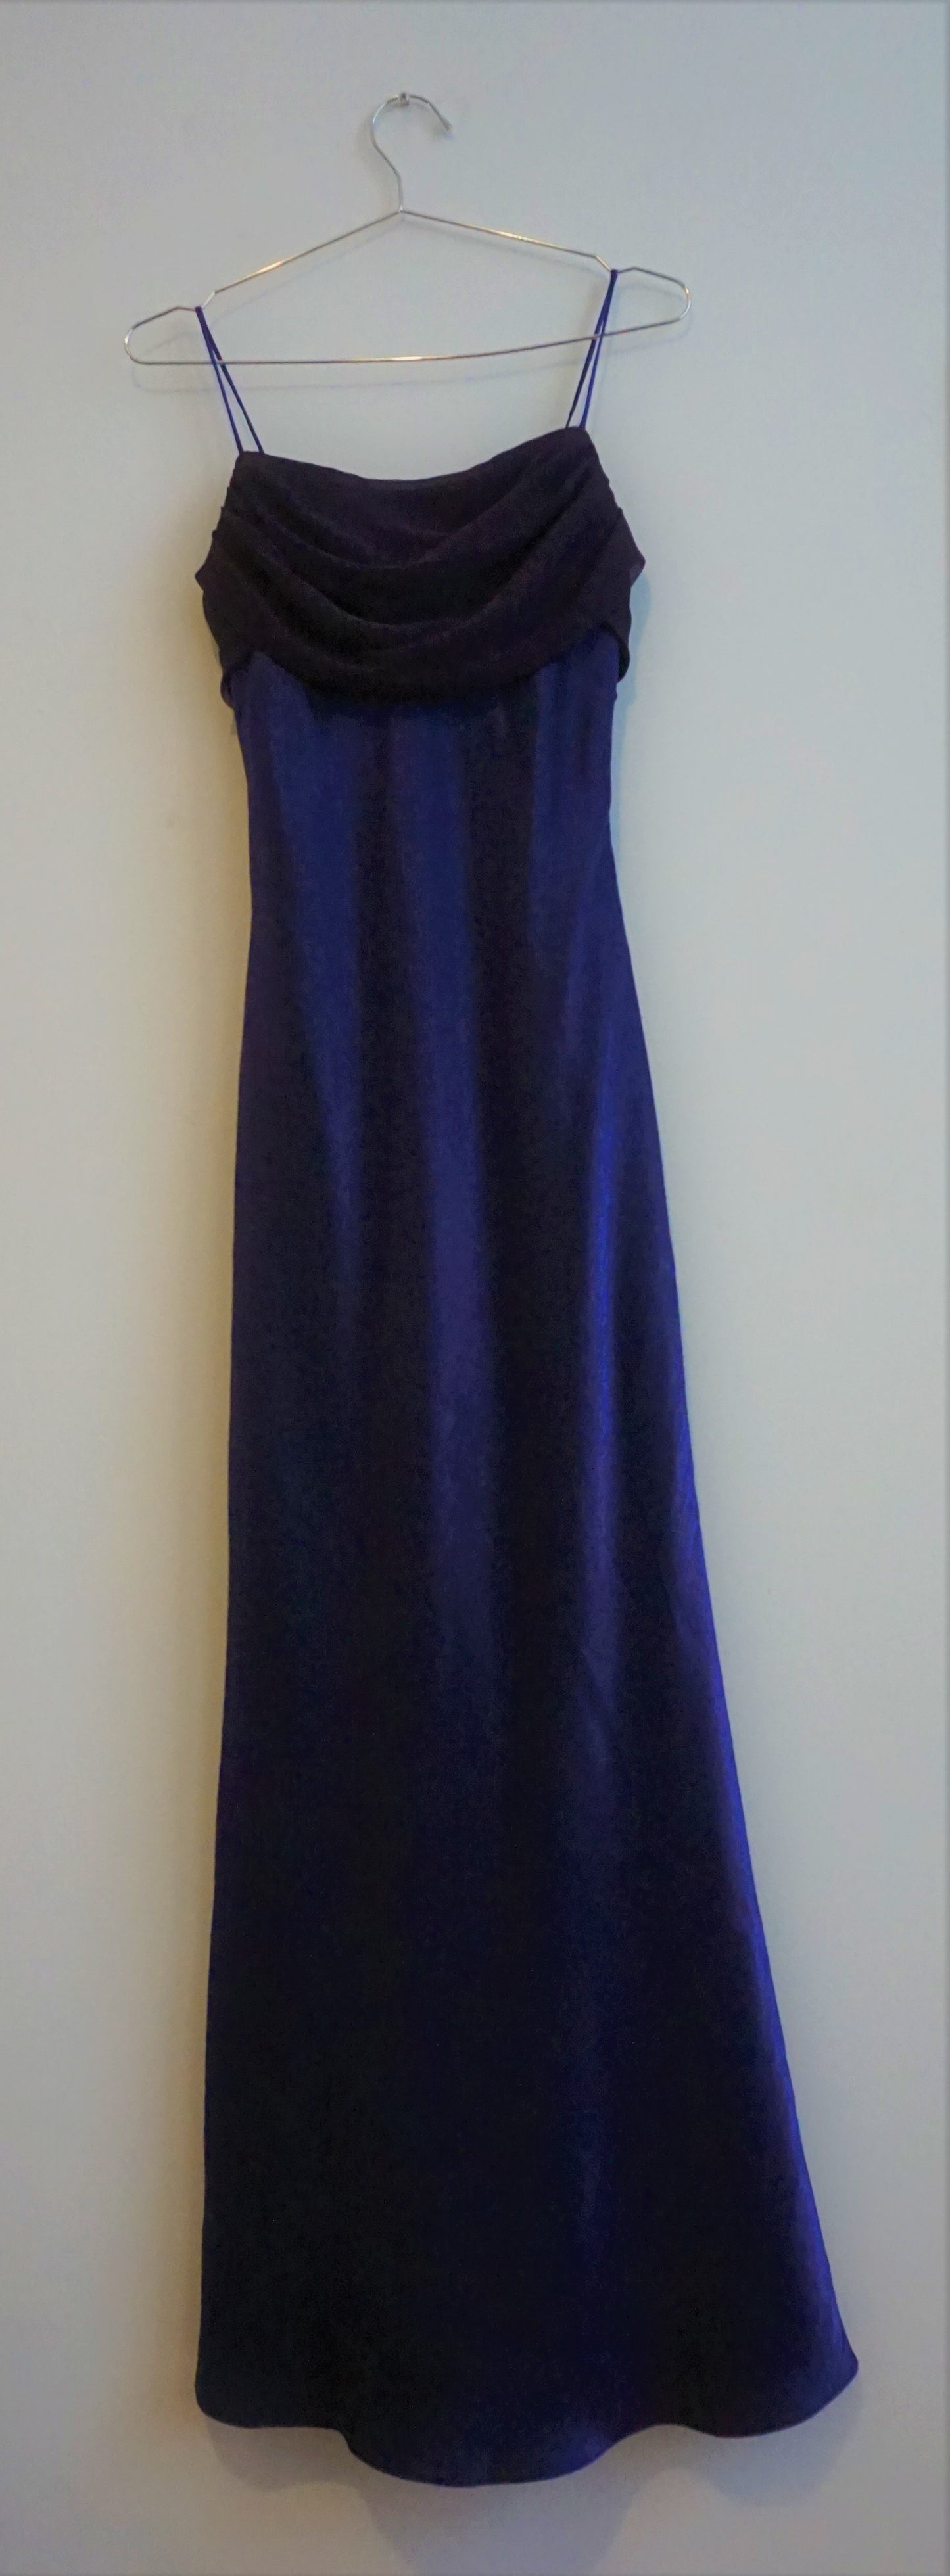 Full length bias cut 90s gown